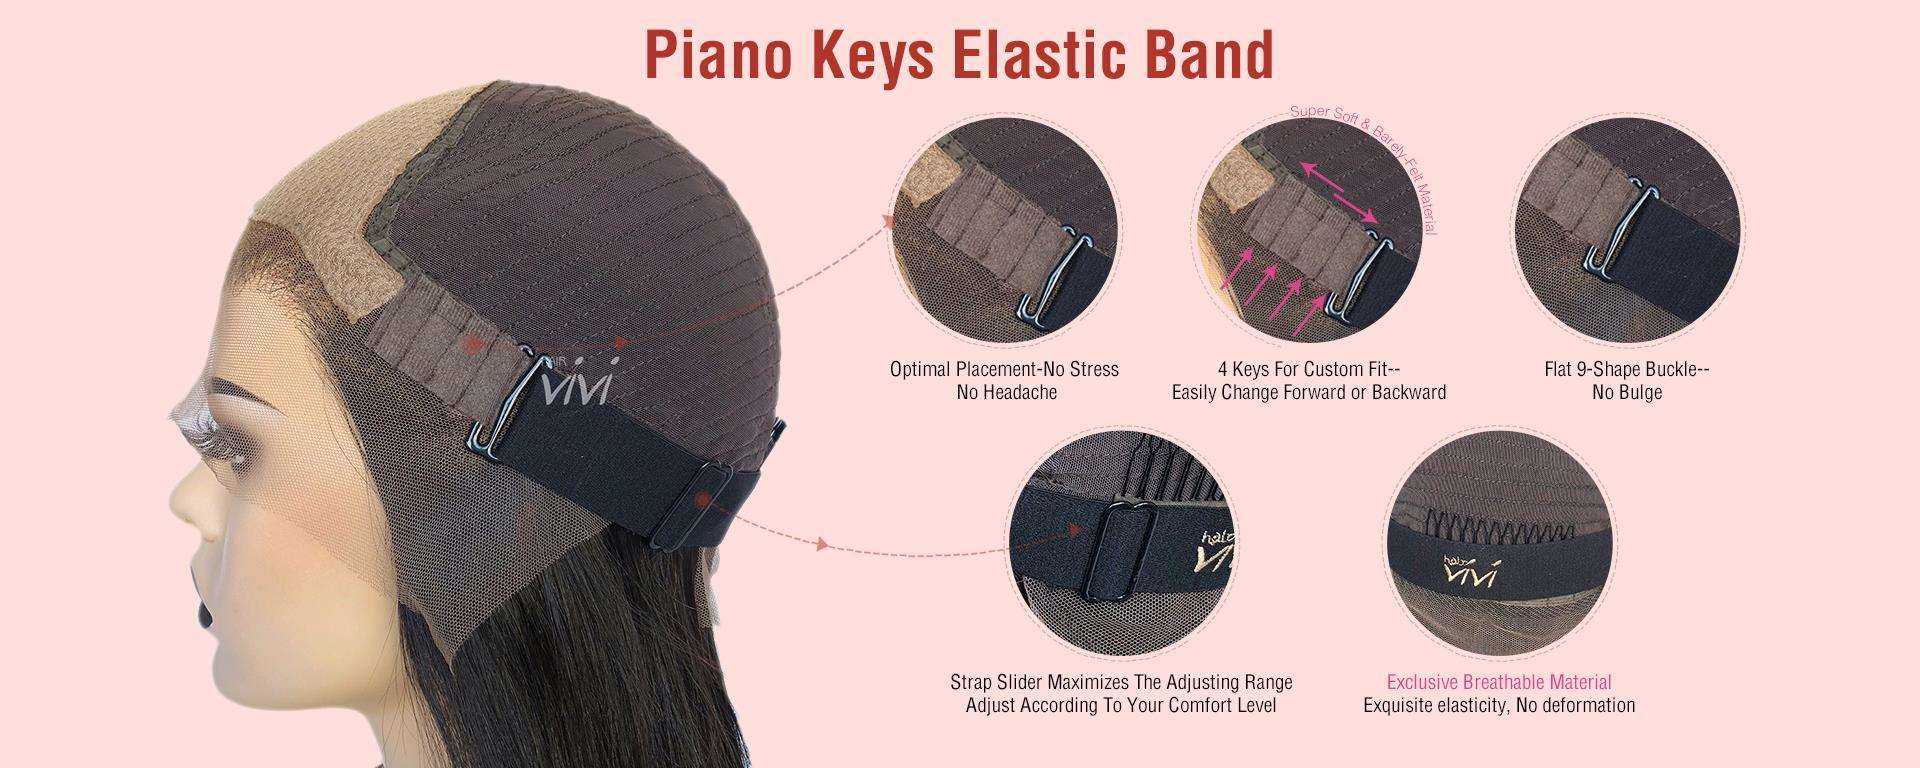 piano keys elastic band